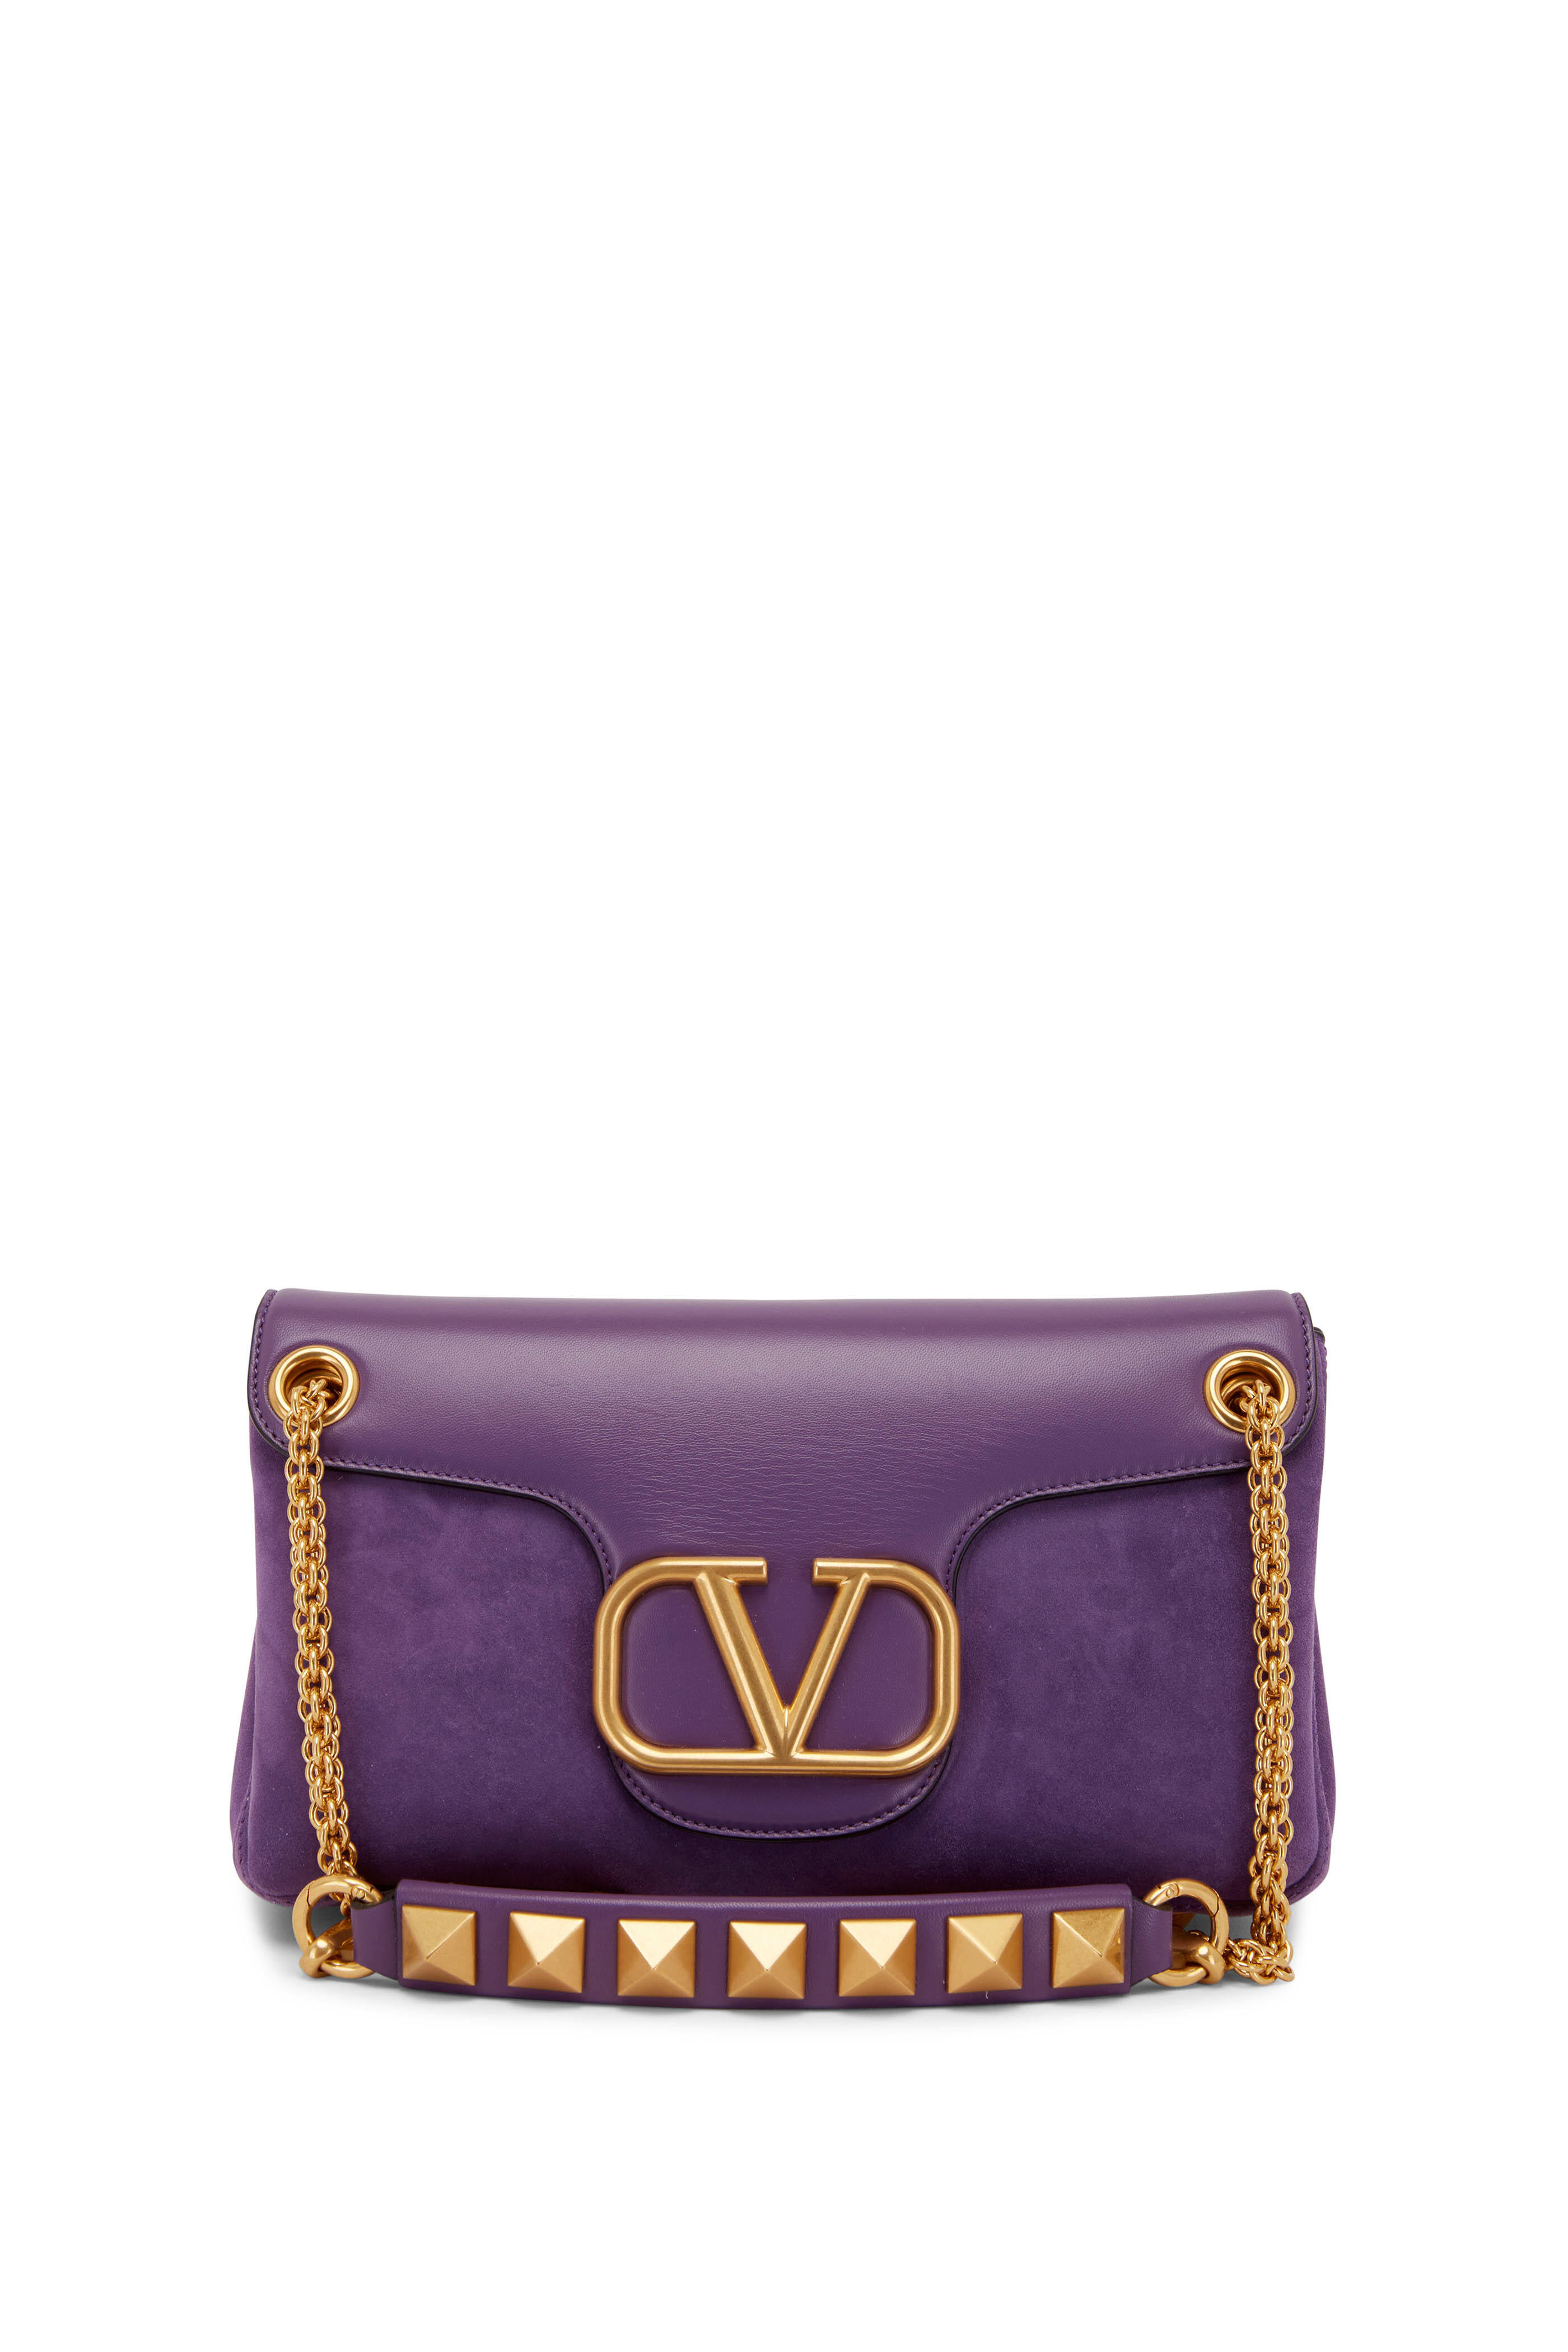 Valentino Purple Leather Rockstud Clutch Pouch